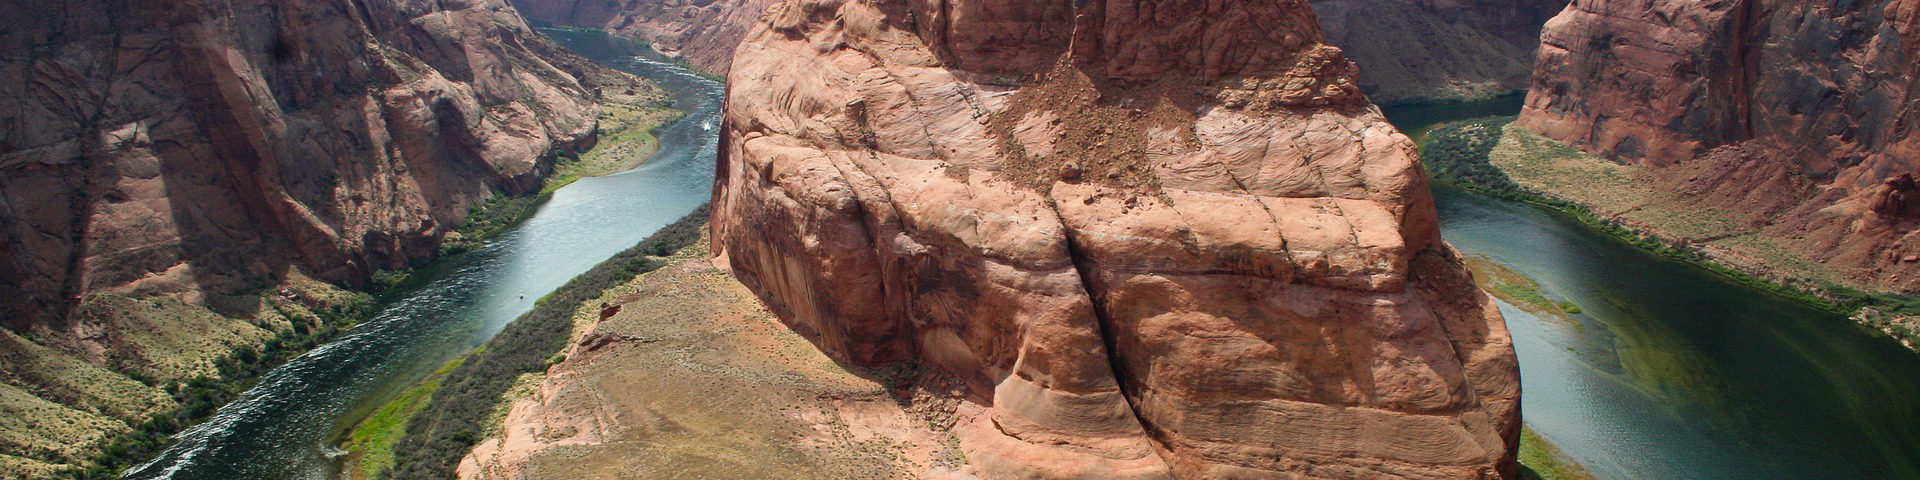 большой каньон сша